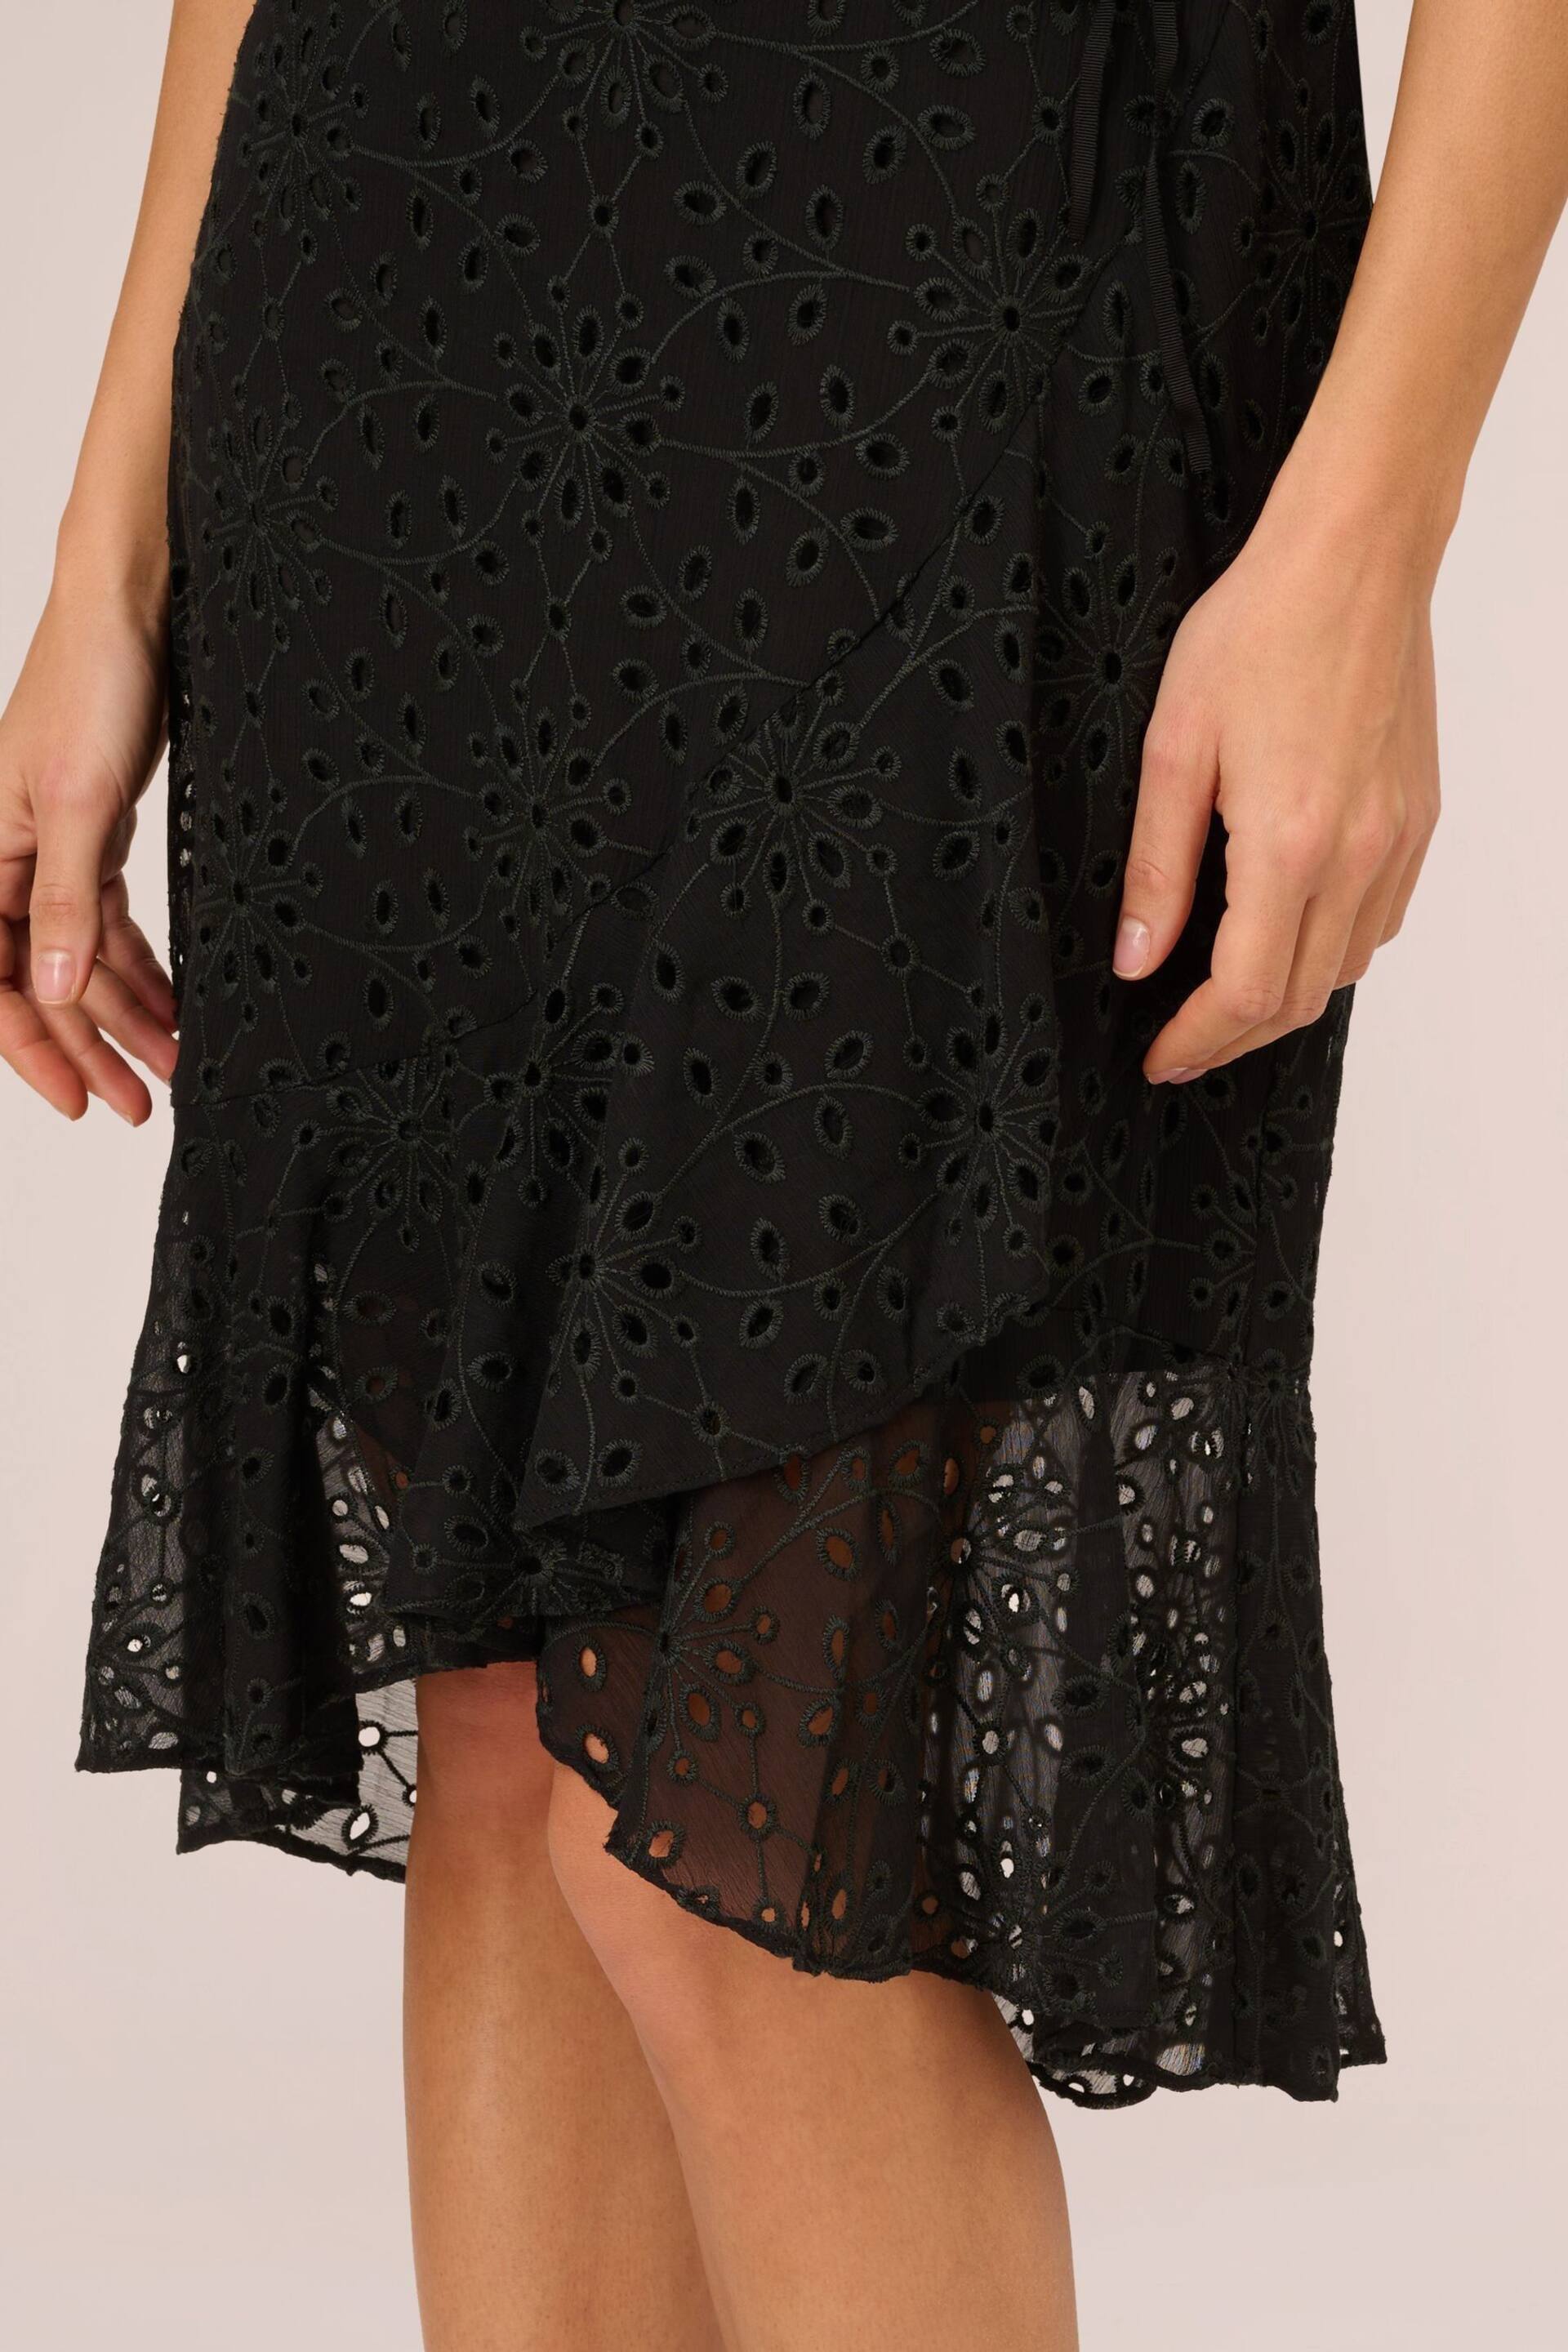 Adrianna Papell Ruffle Midi Black Dress - Image 5 of 7